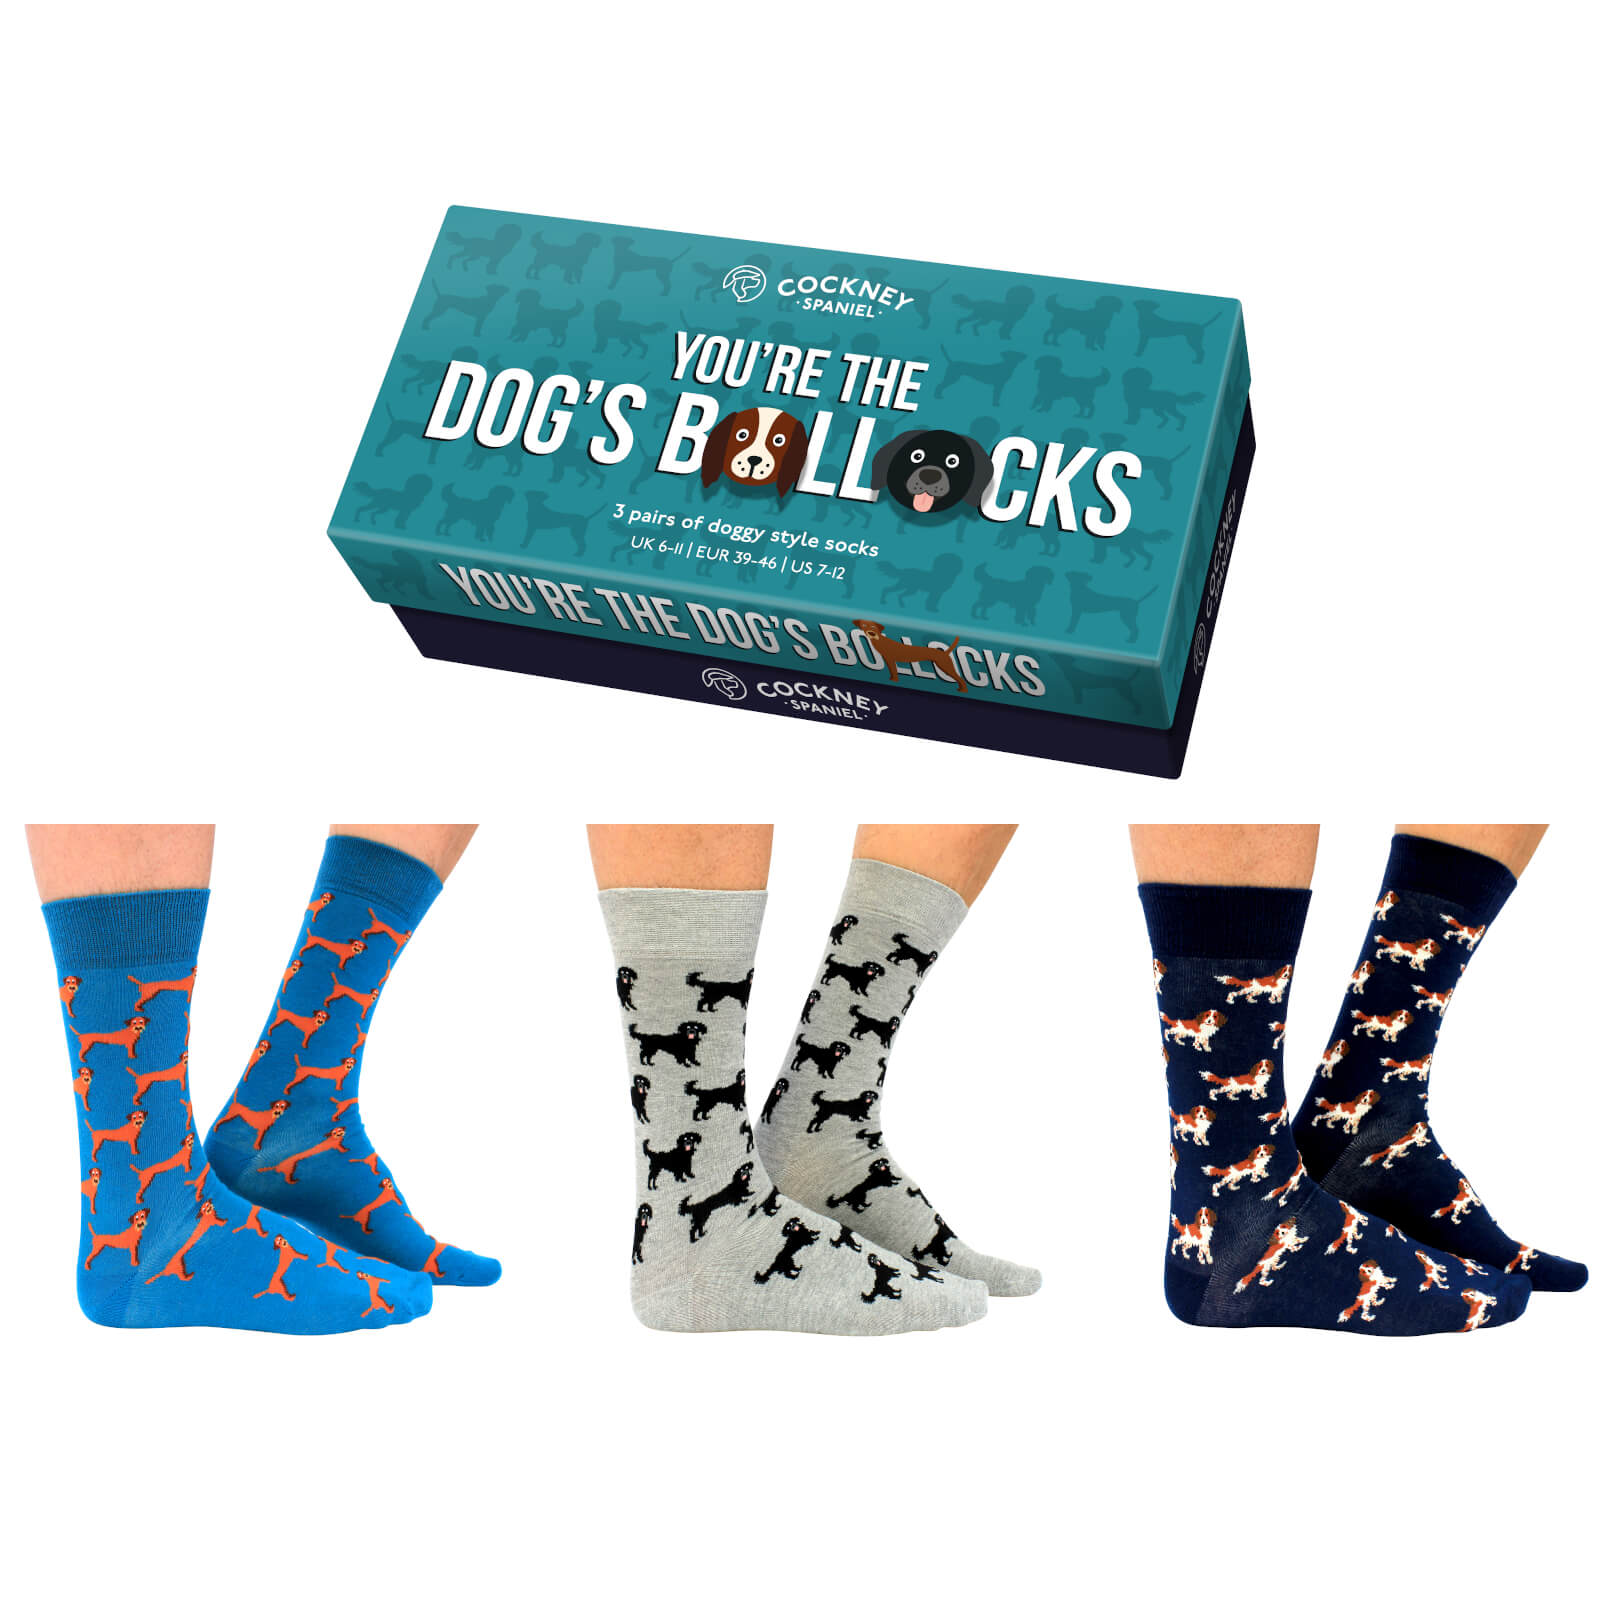 Cockney Spaniel 'You're The Dog's B*llocks' Sock Gift Set